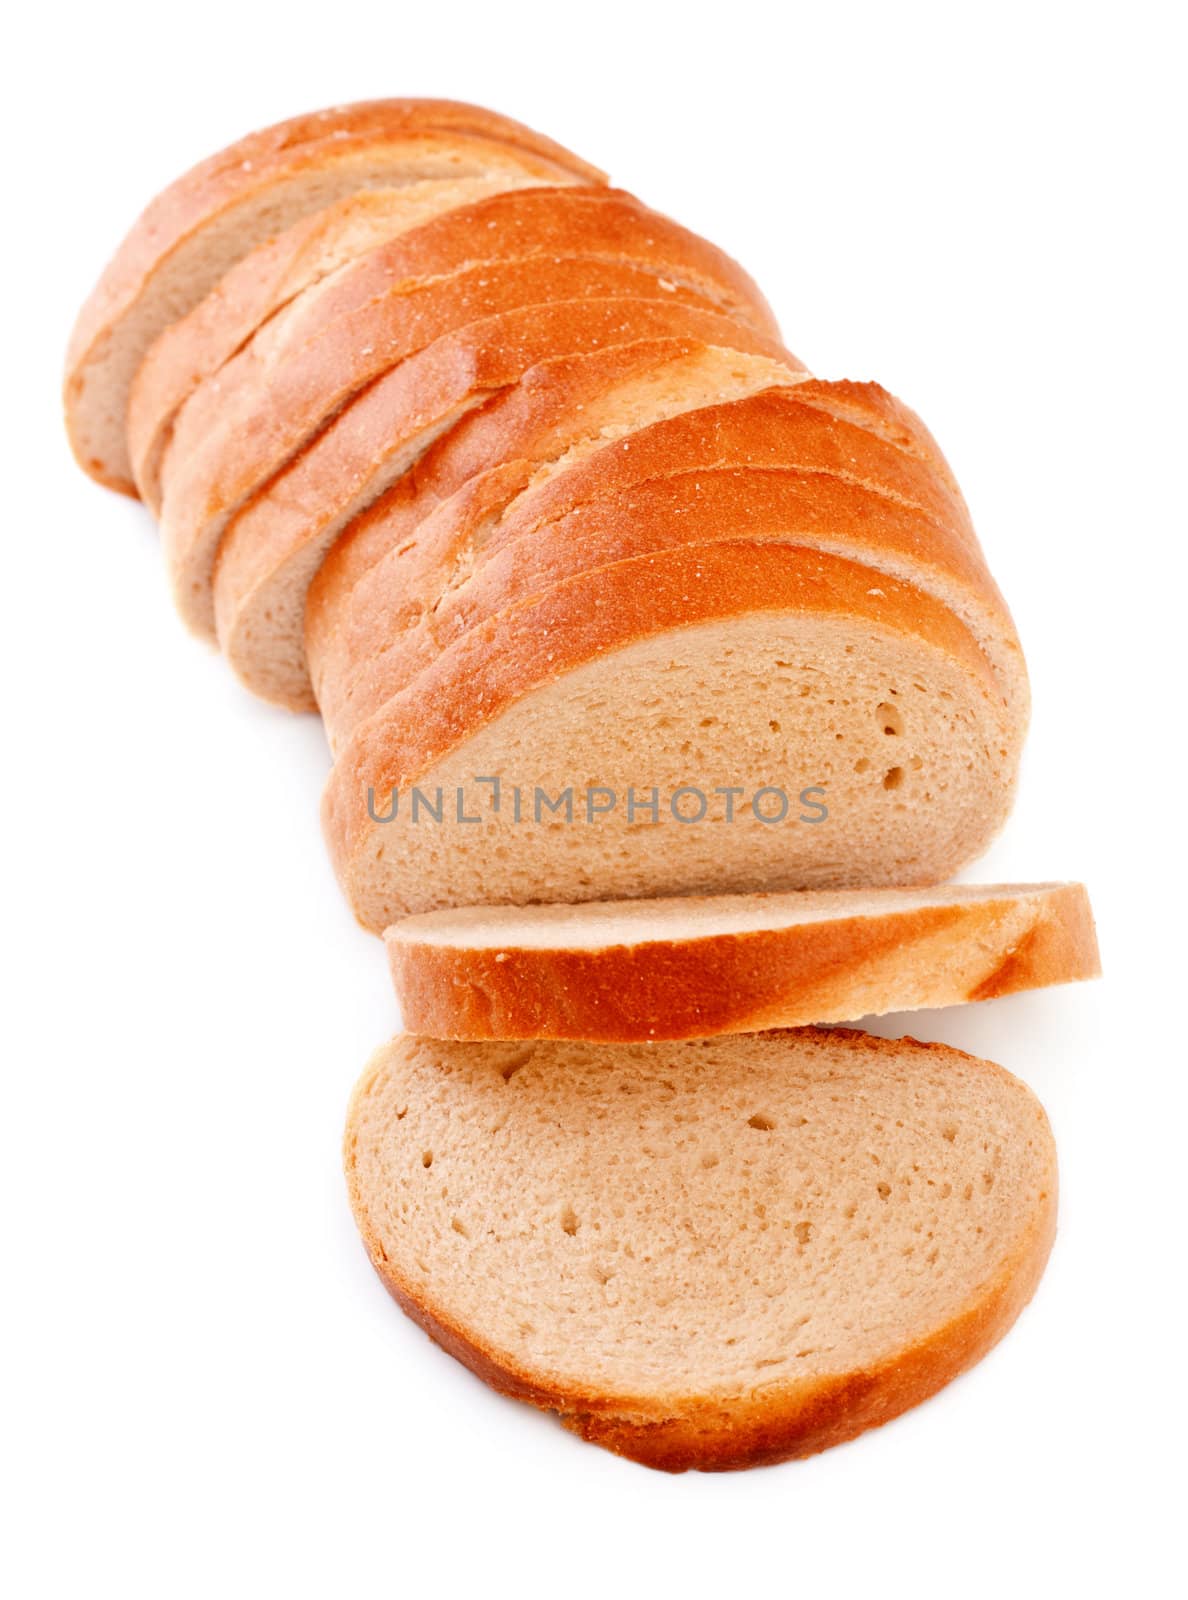 White Bread by petr_malyshev